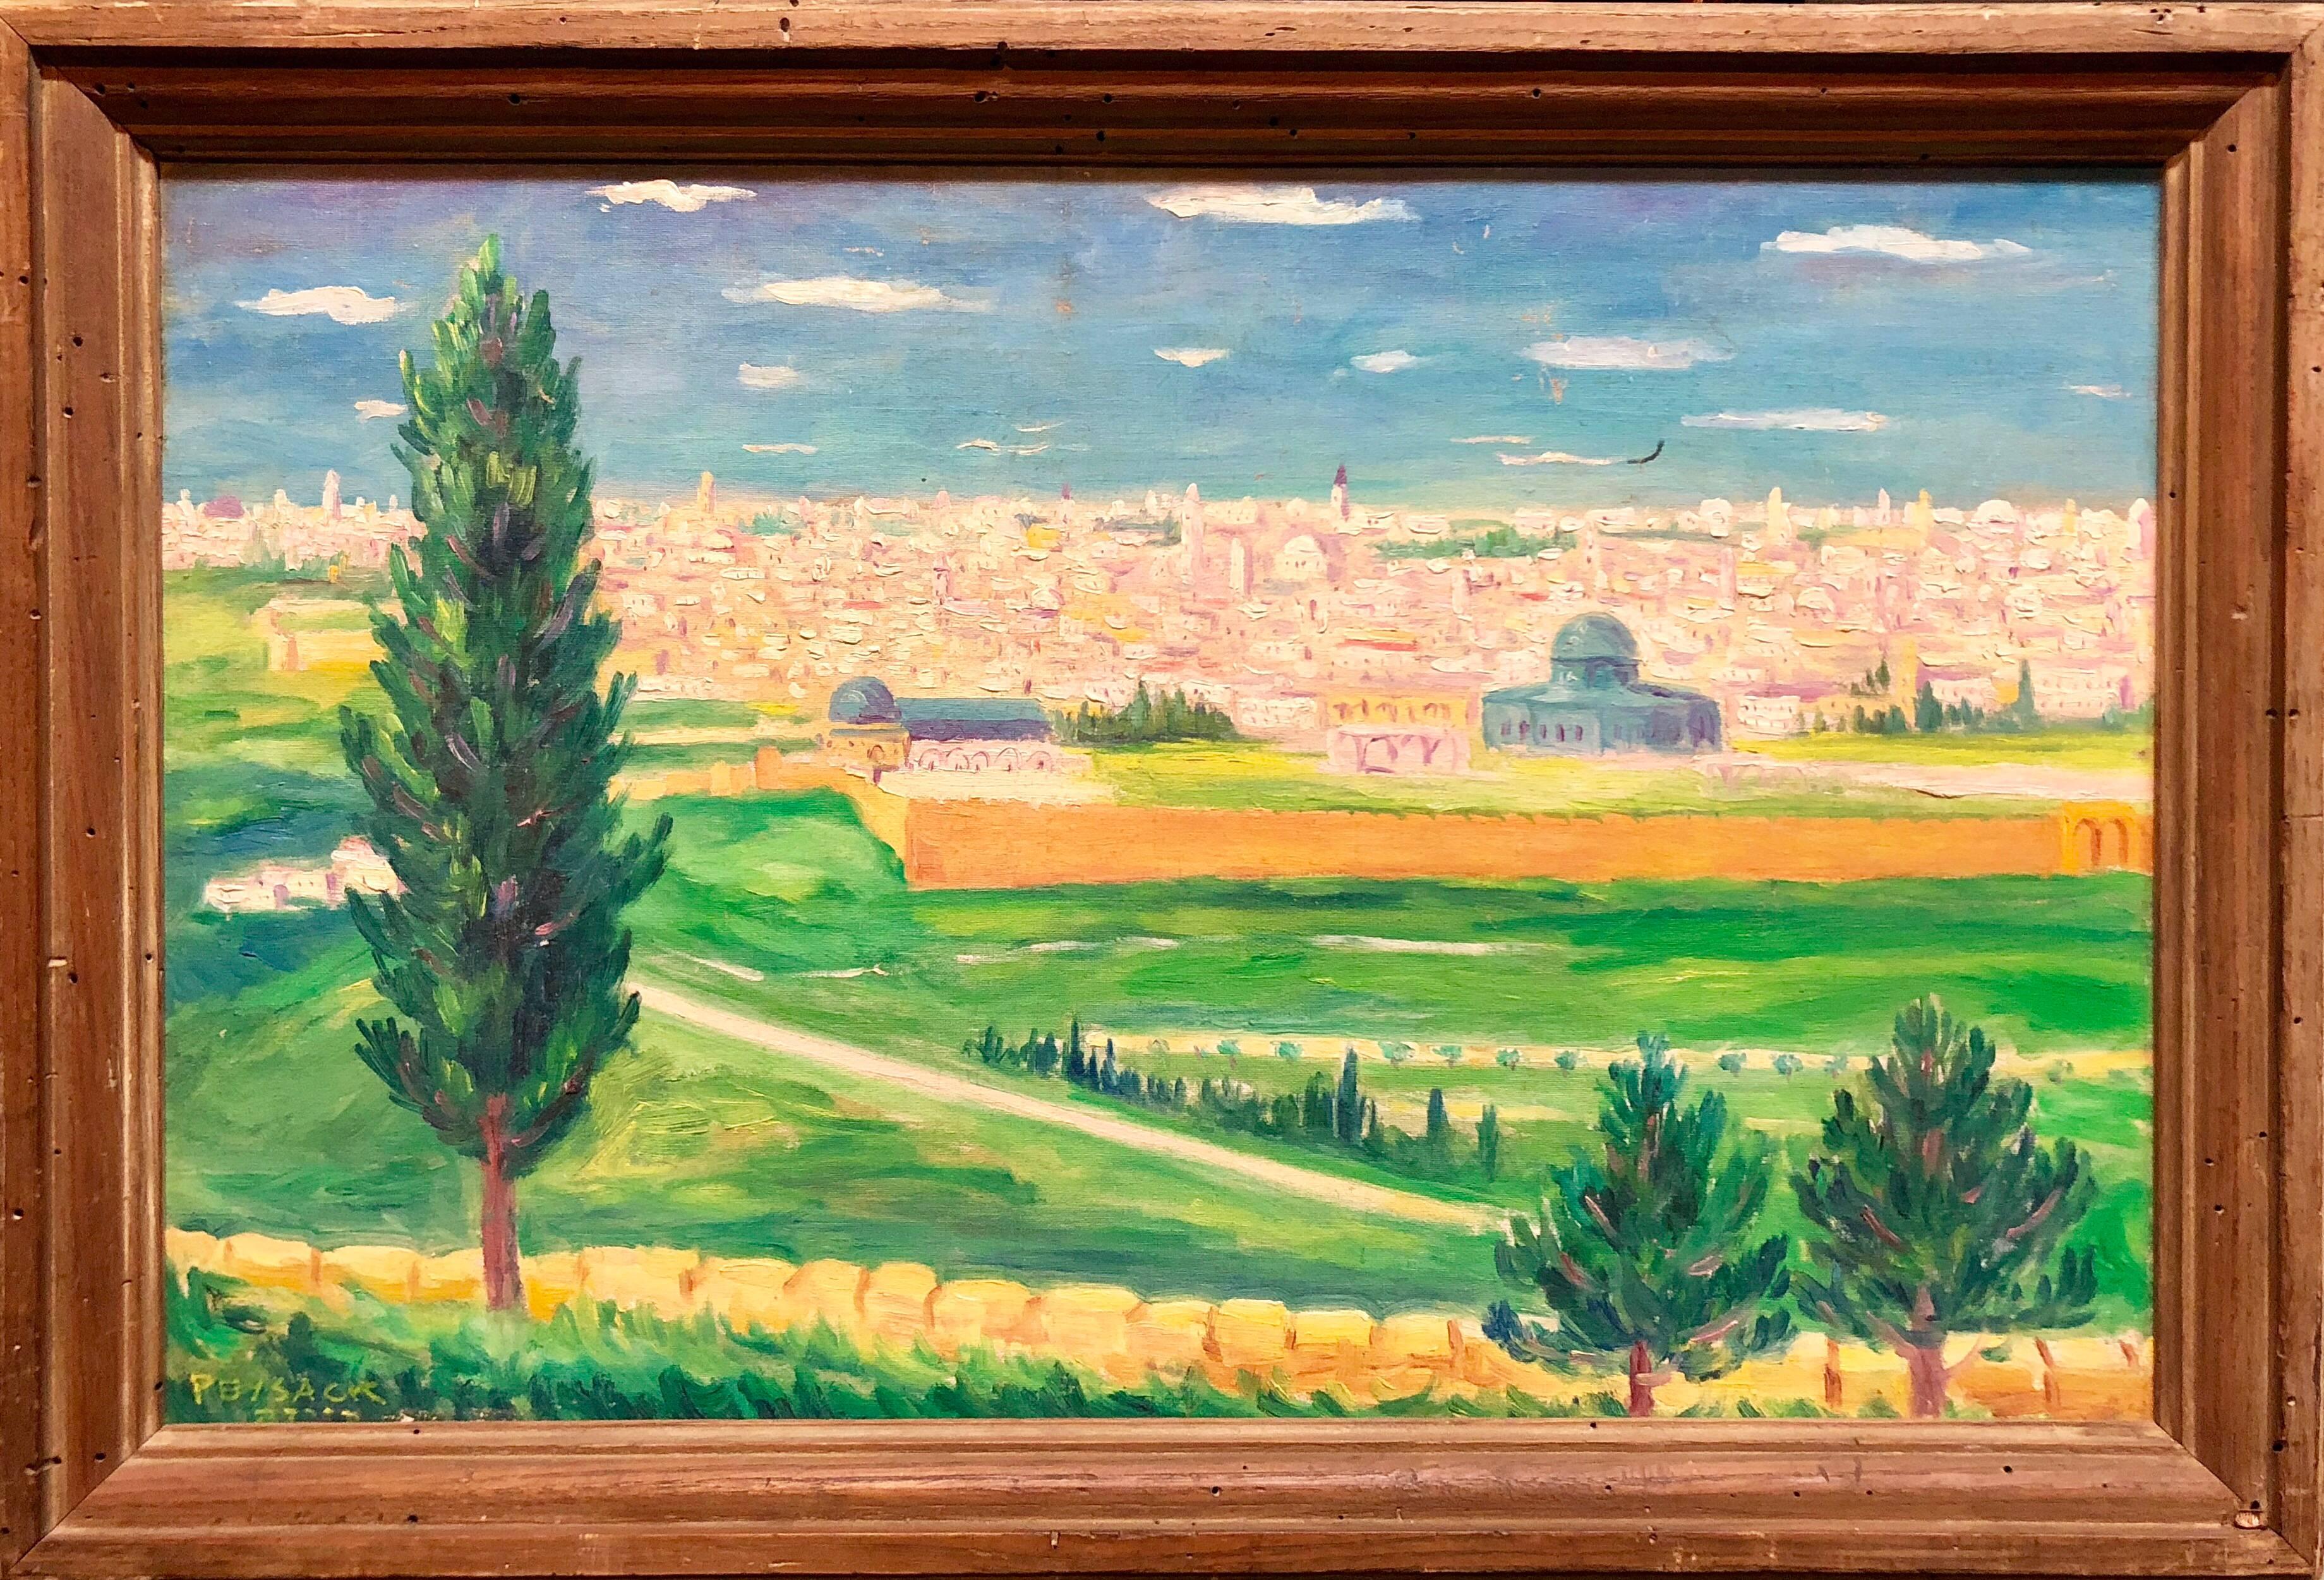 German Israeli Oil Painting Jerusalem Panorama of Old City Walls - Brown Figurative Painting by Arye Leo Peysack